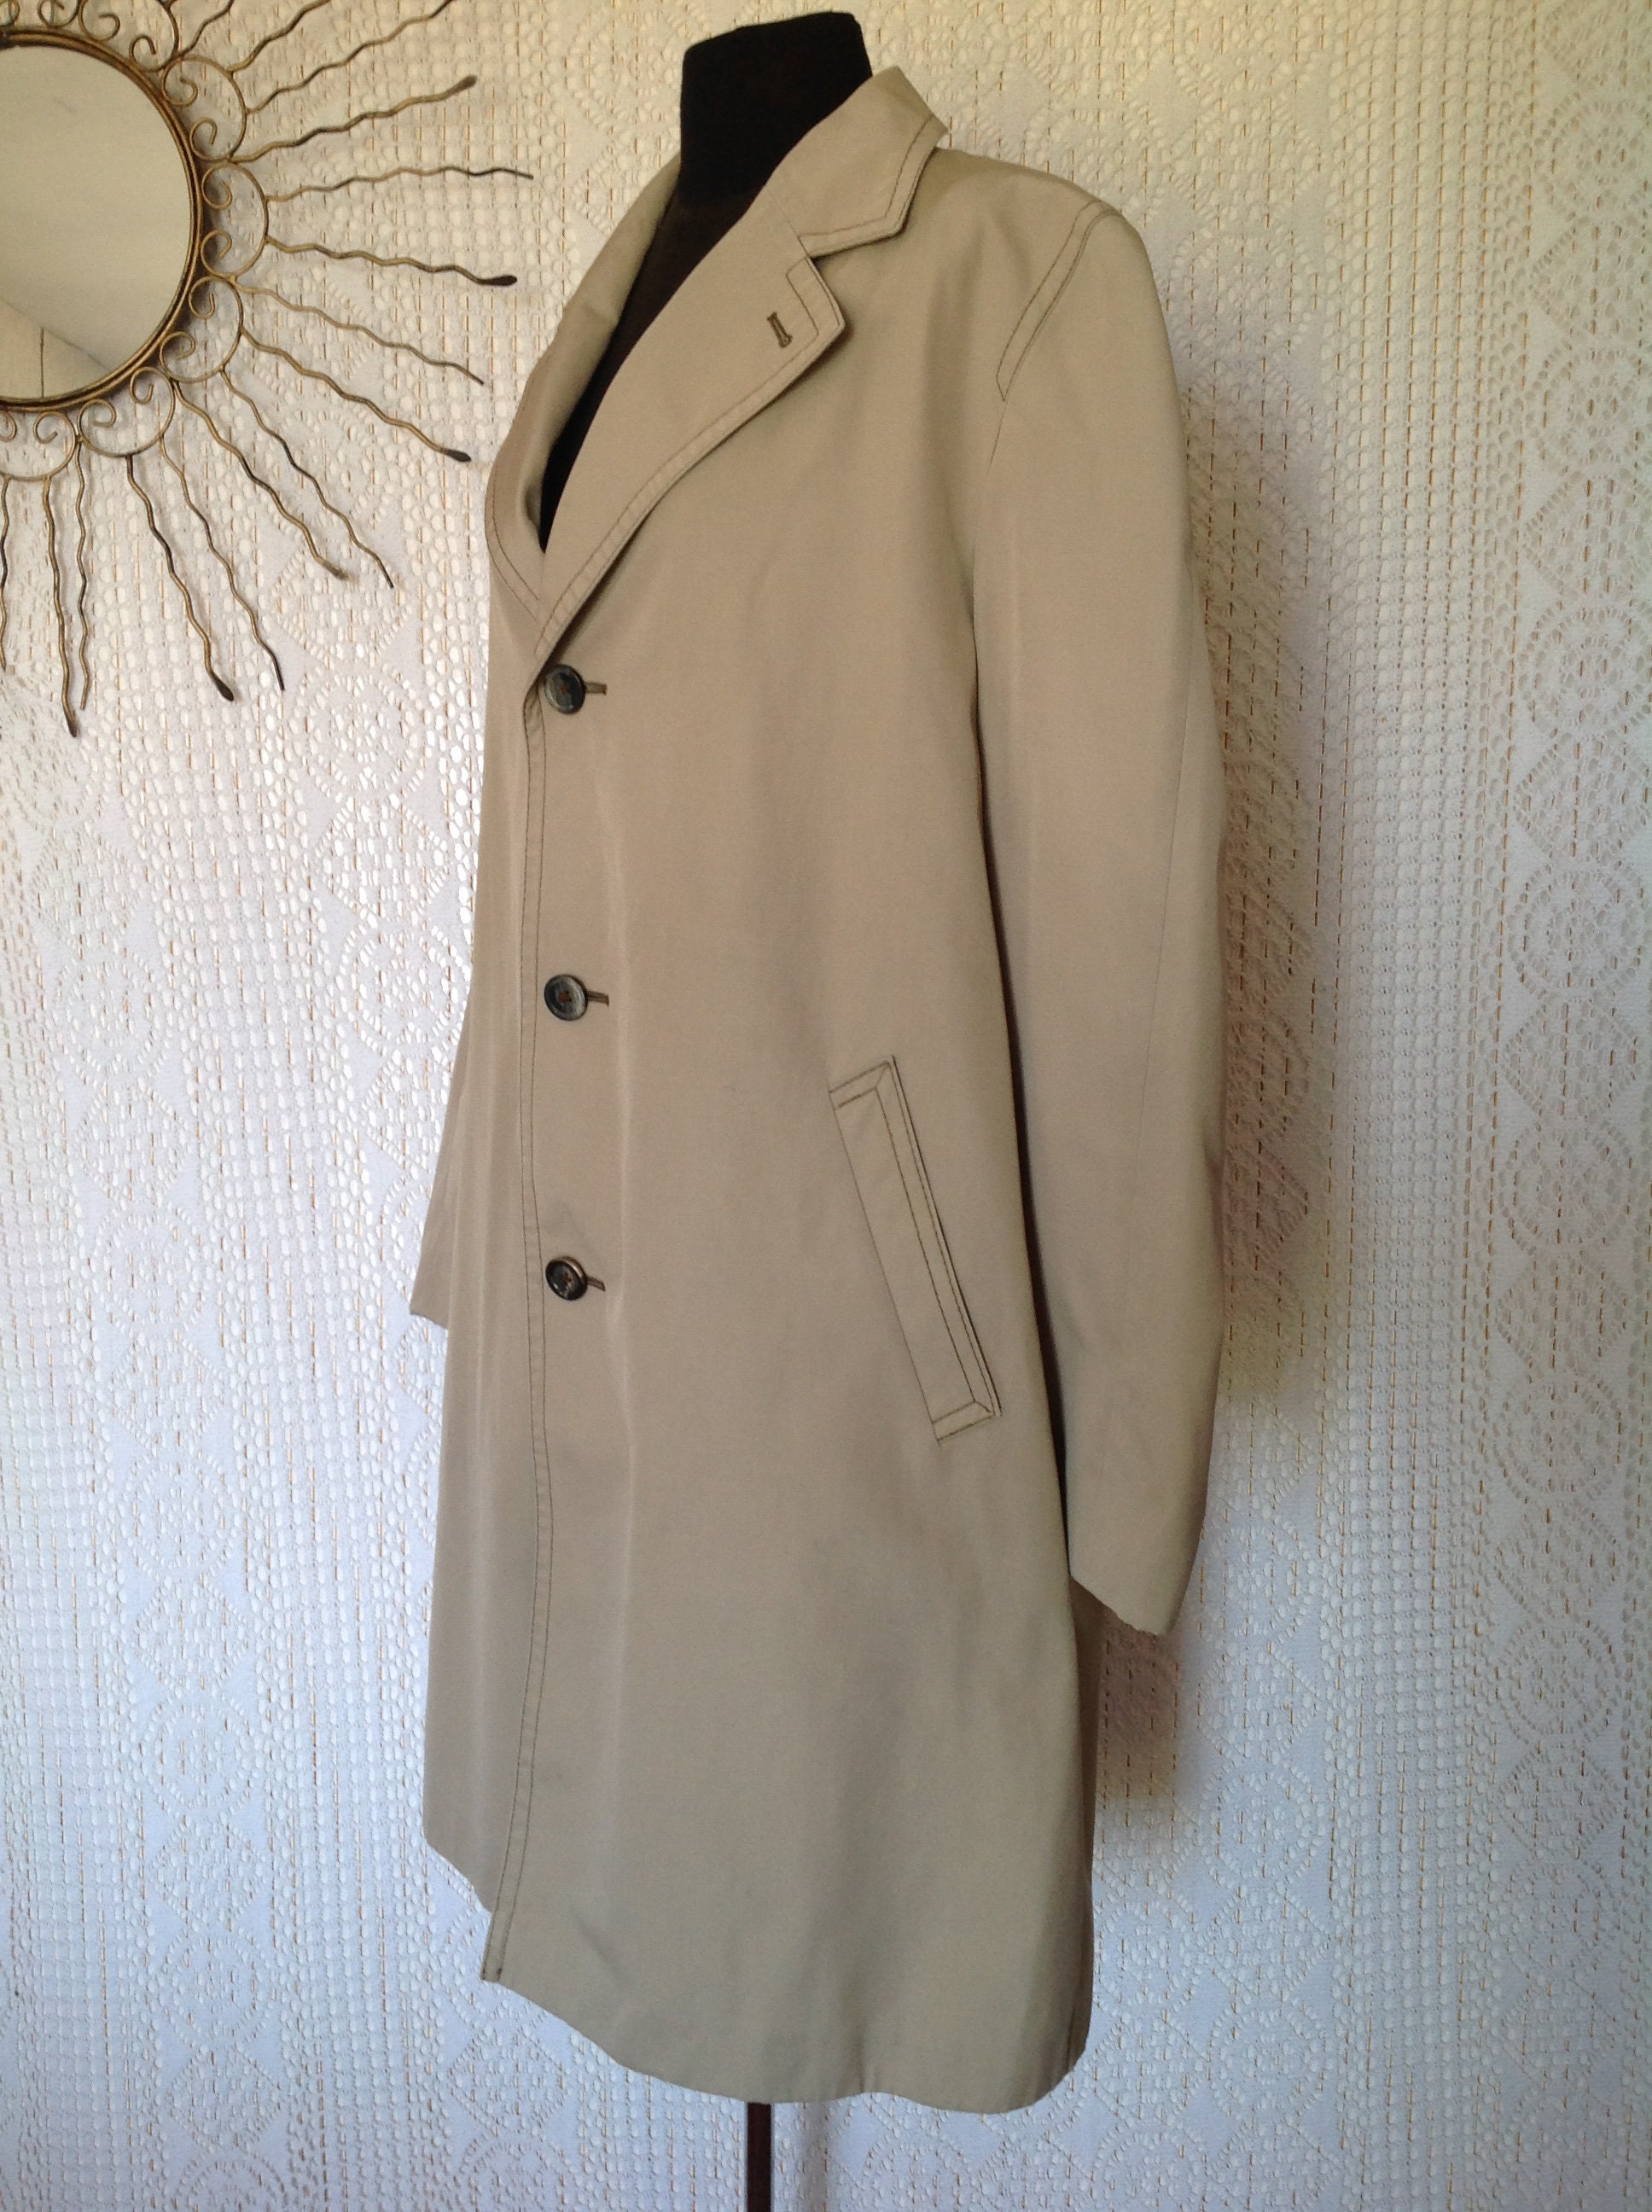 Nino Flex Diolen Vintage Trench Coat Size 54/56 Coat Trench - Etsy